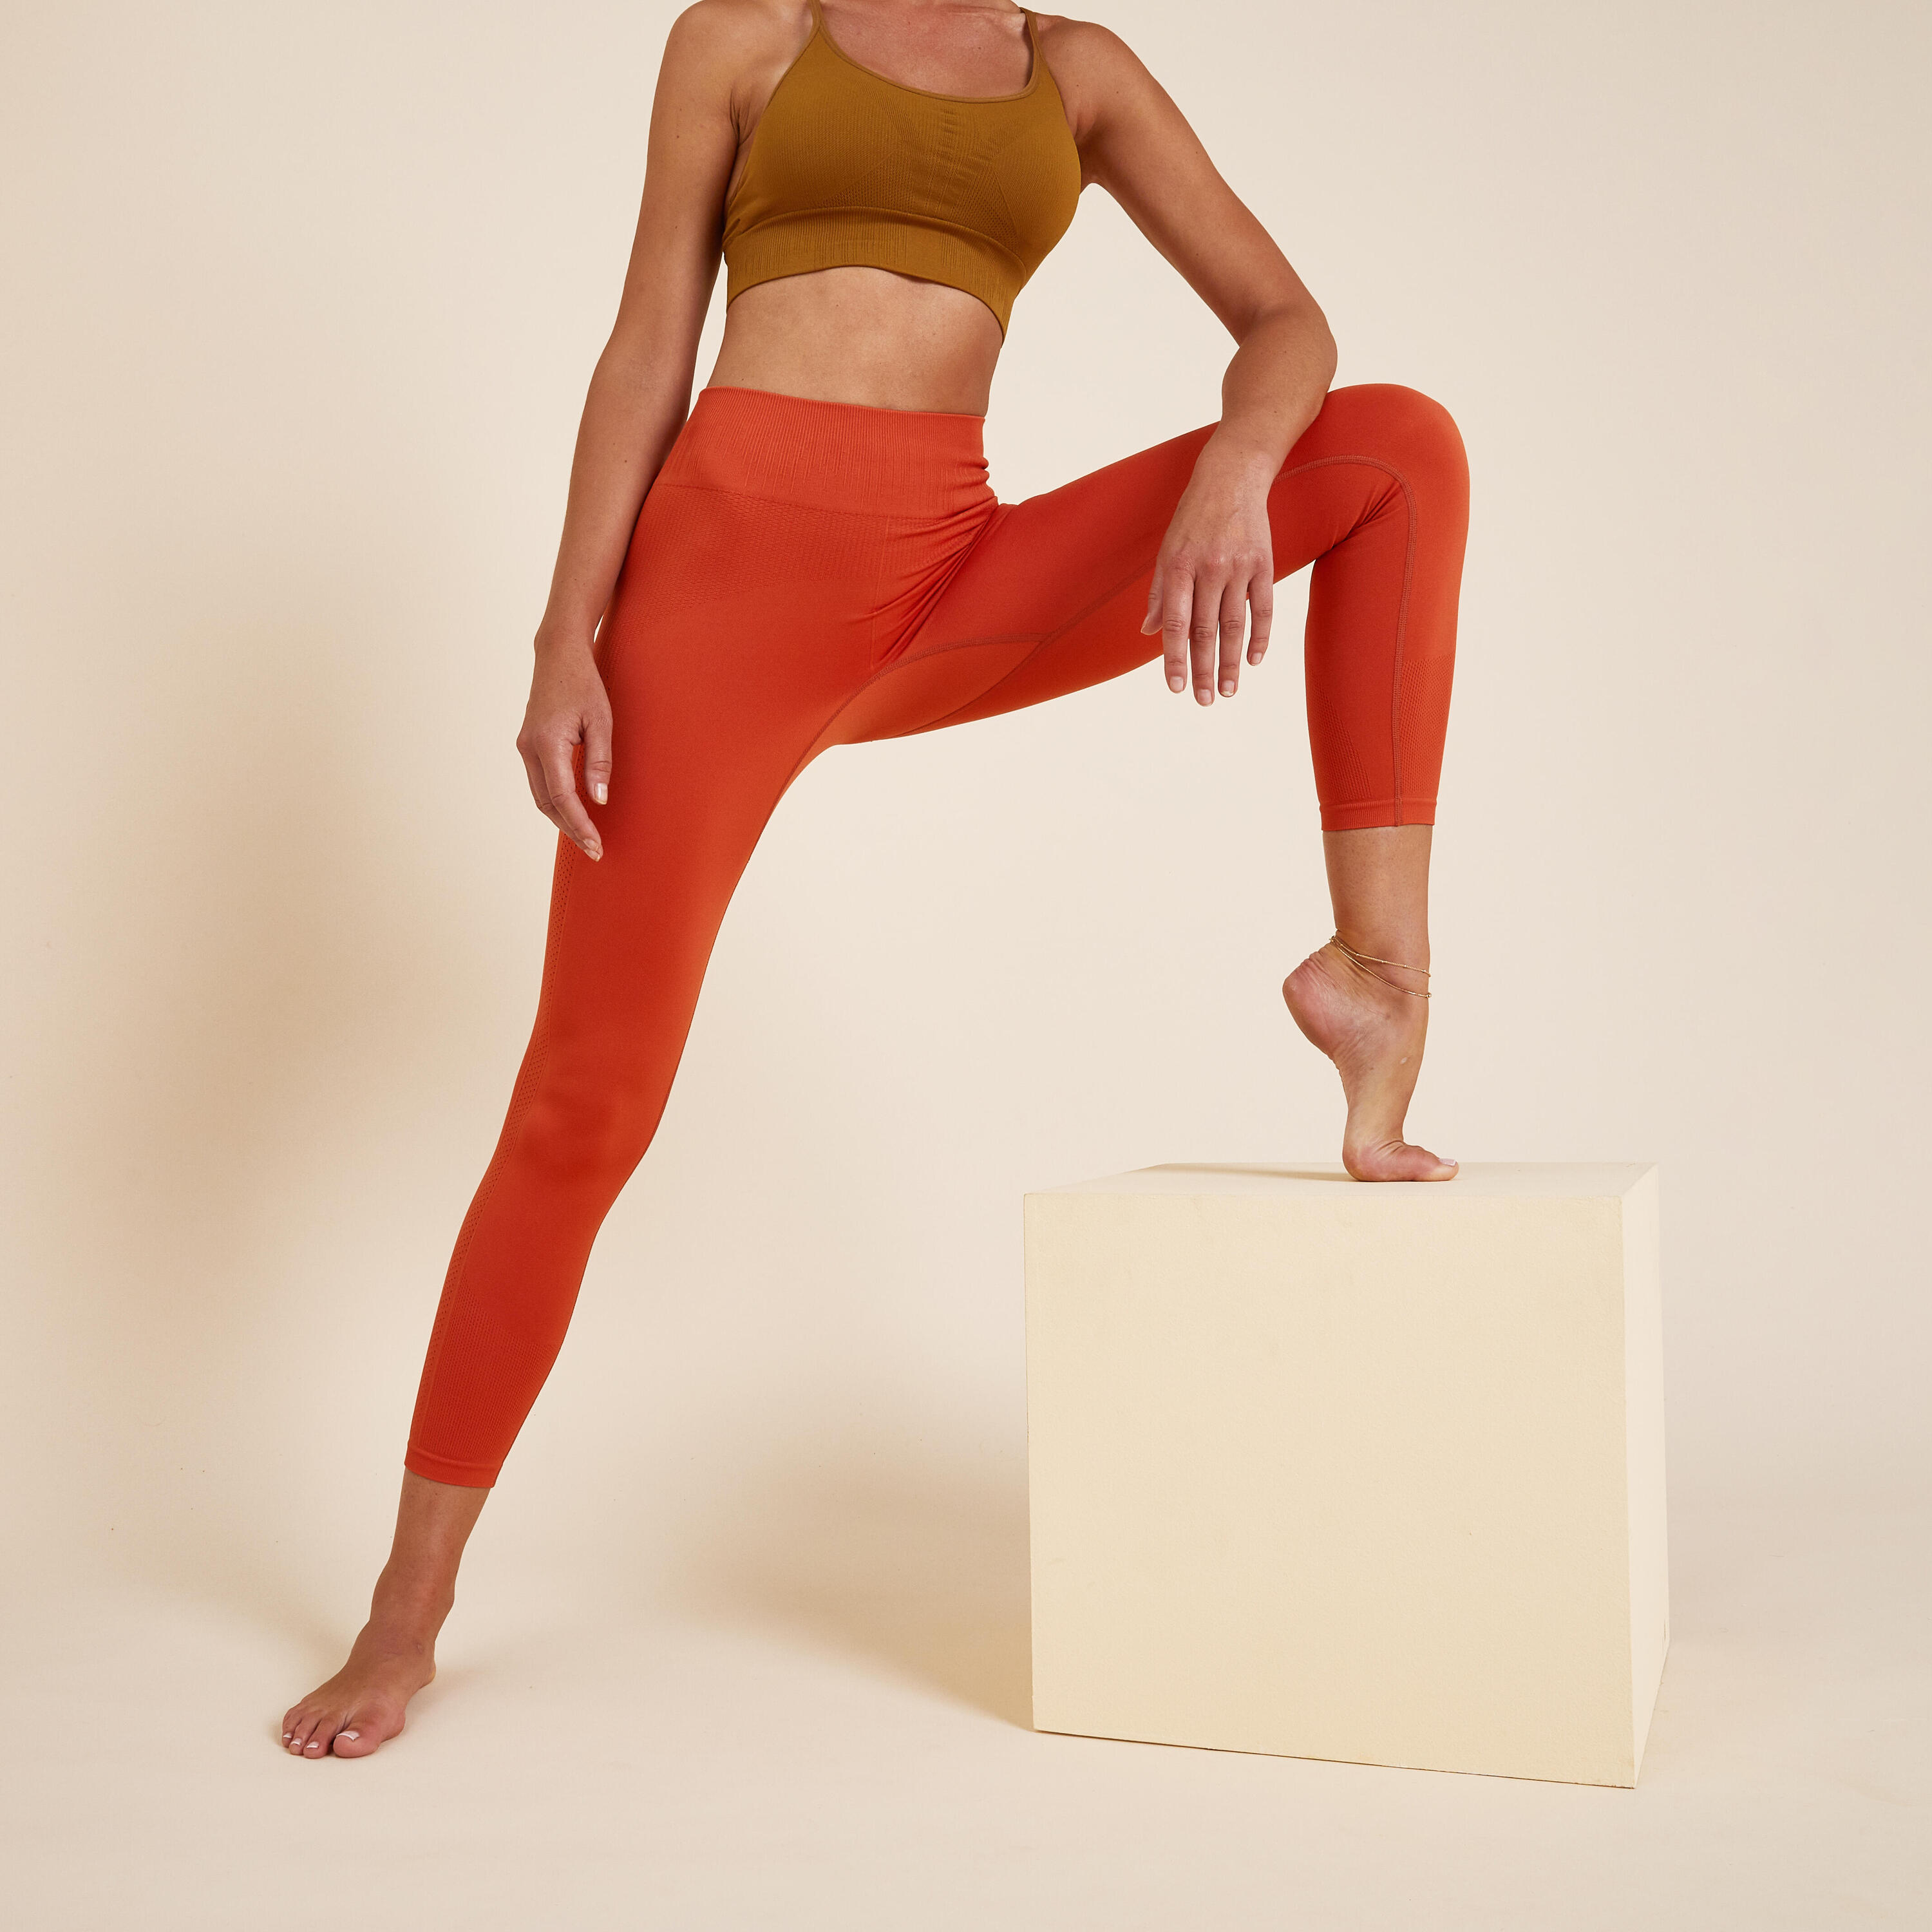 KIMJALY Seamless Short Premium Yoga Leggings - Orange